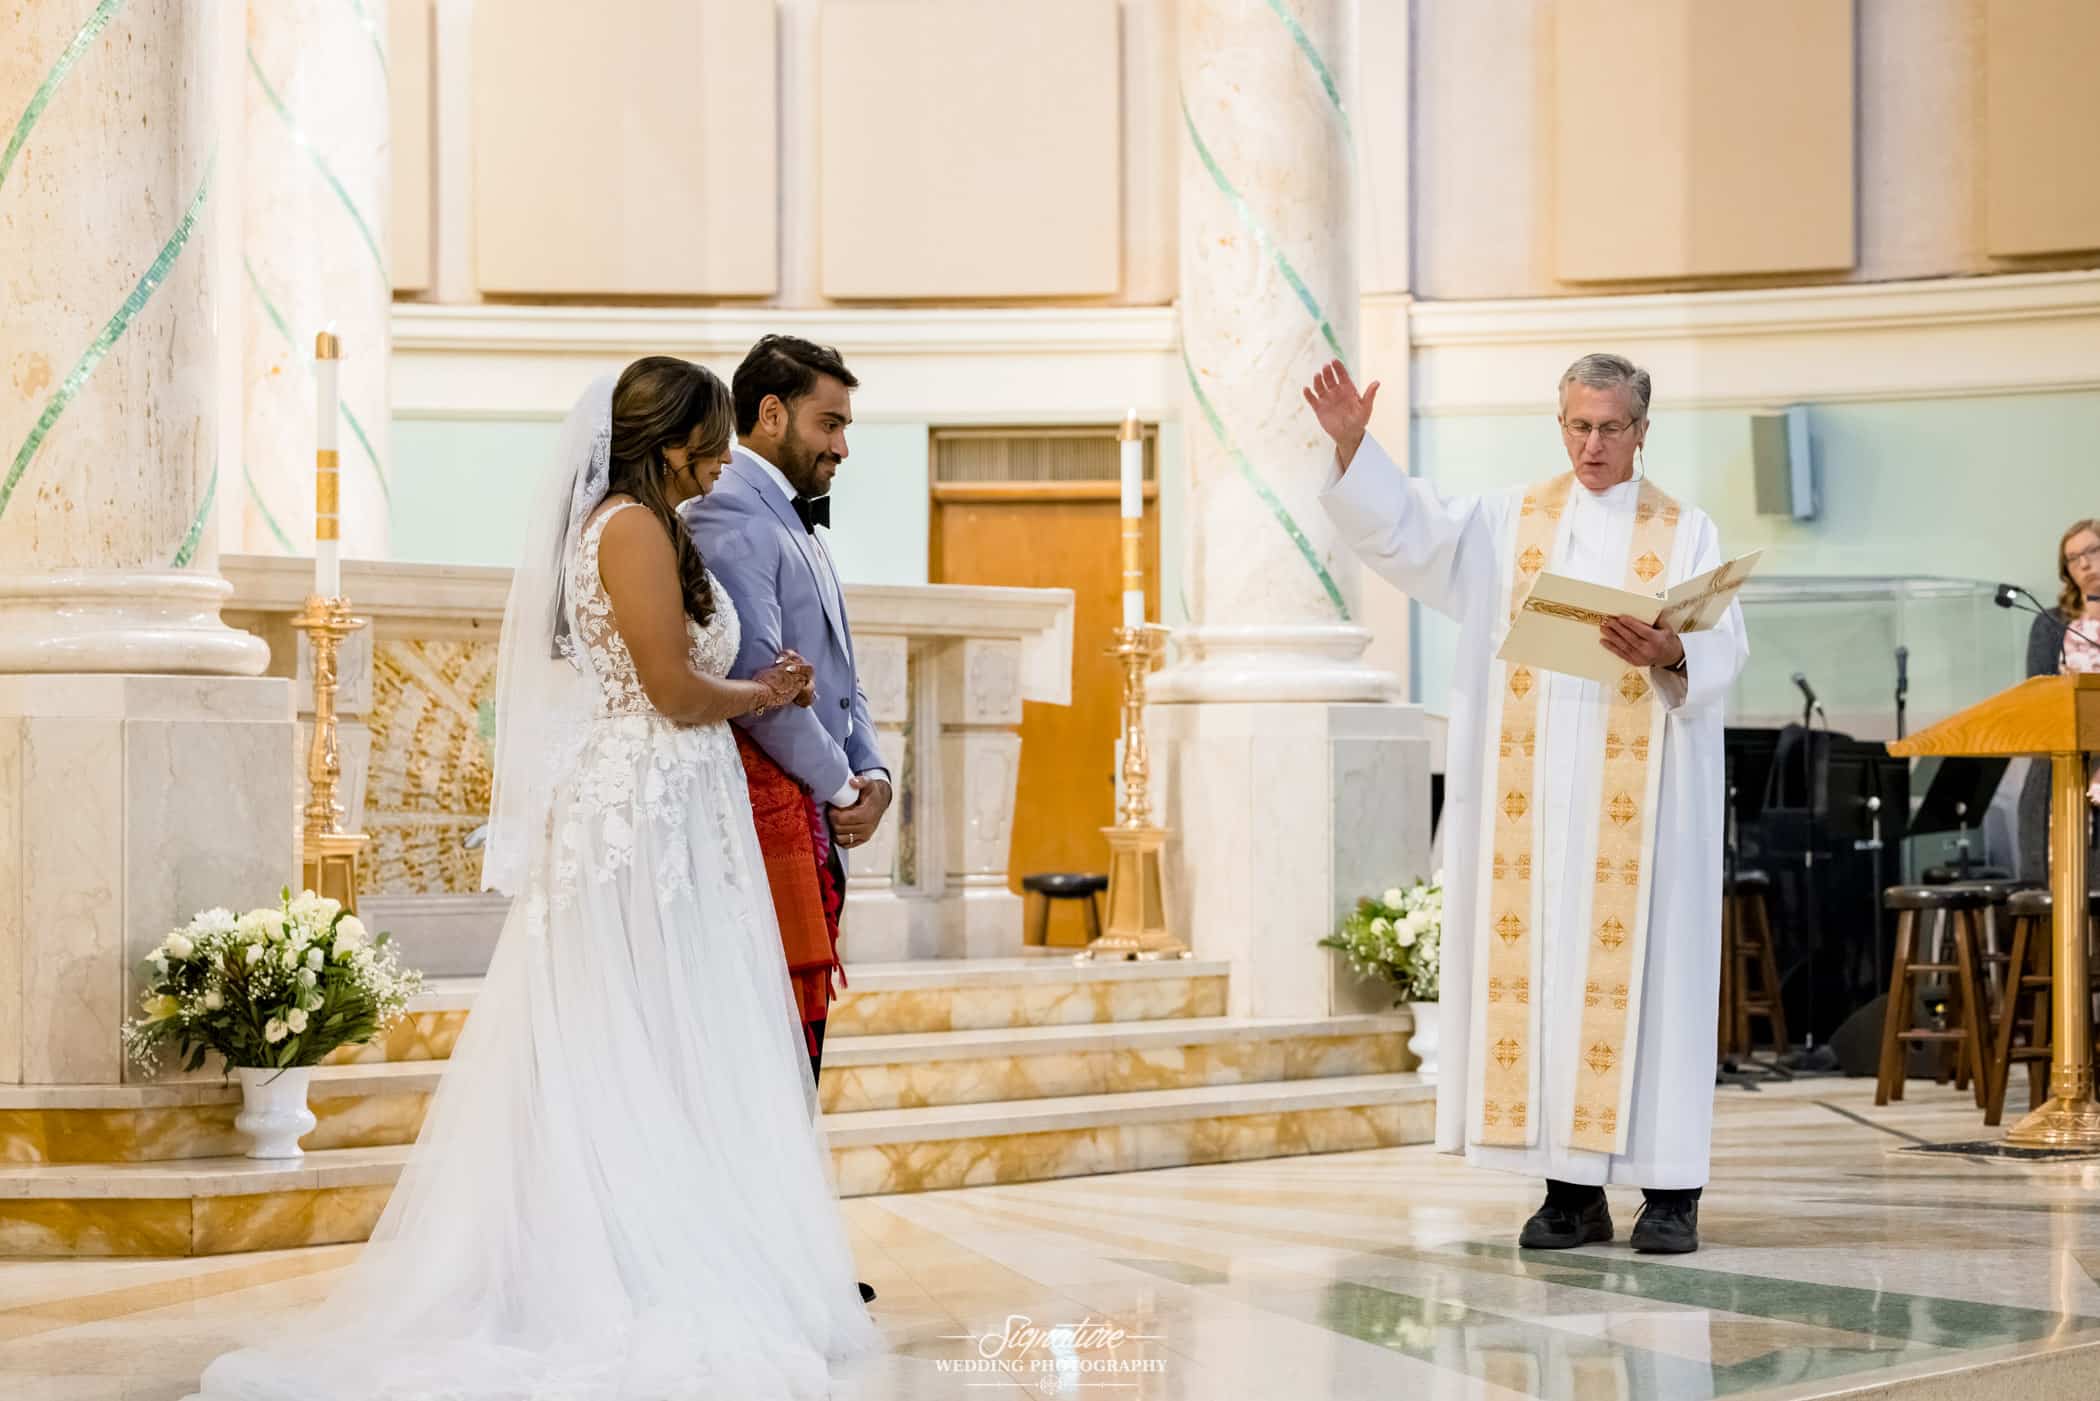 Bride and groom inside church